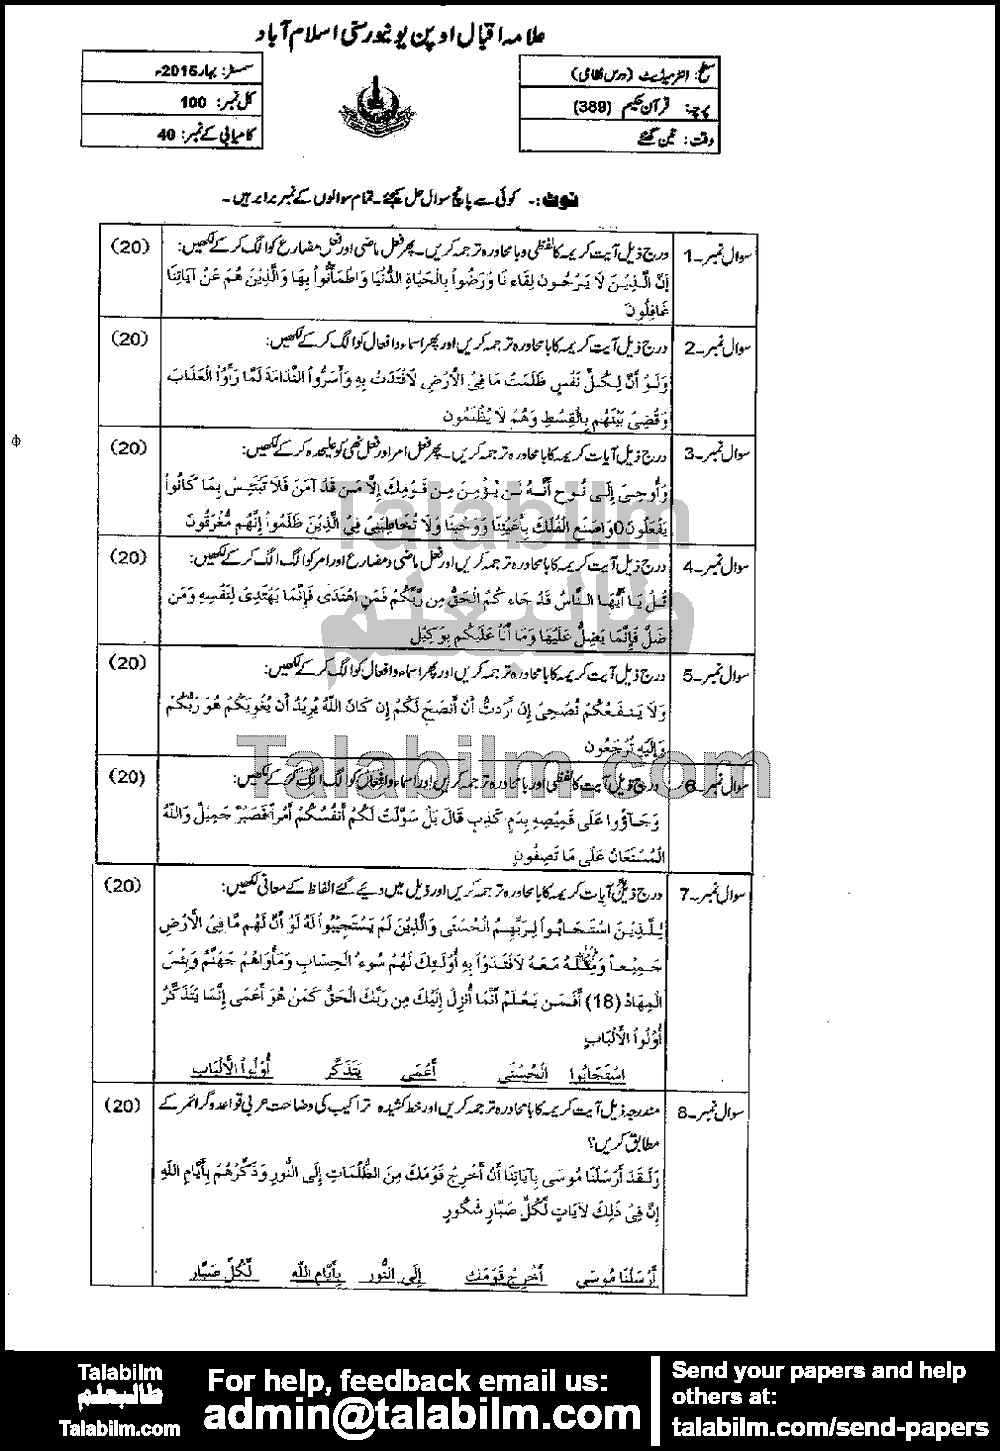 Quran-e-Hakeem 389 past paper for Spring 2015